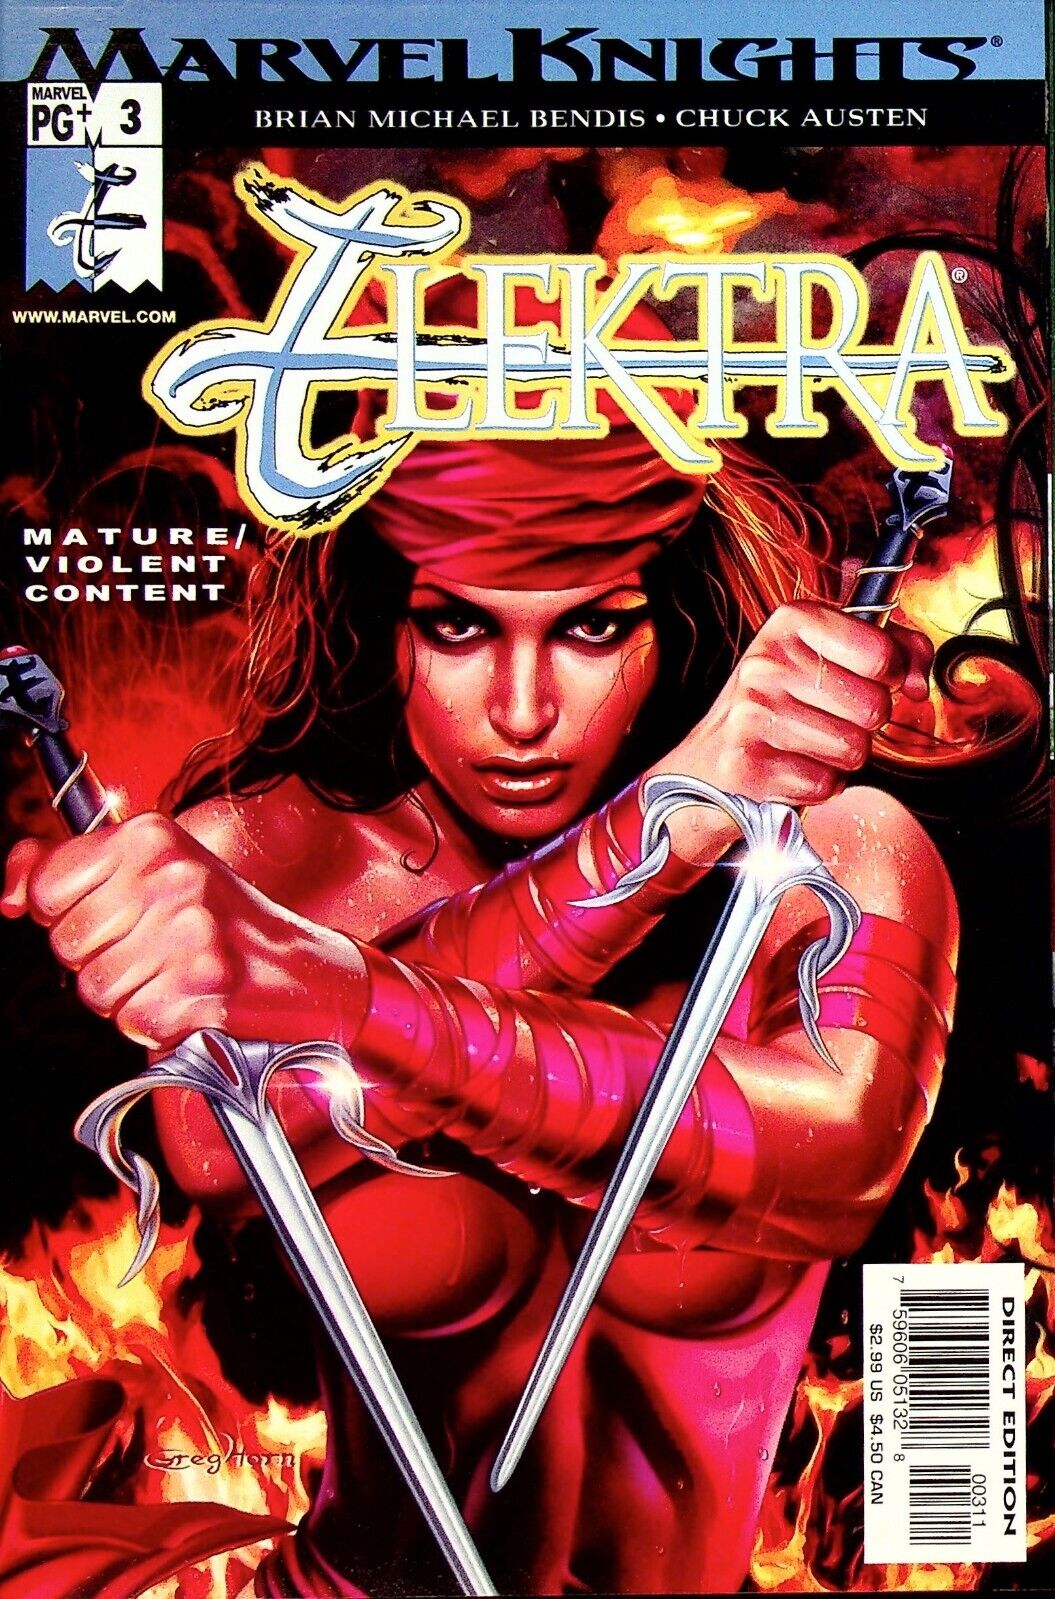 Elektra #3 Marvel Knights Brian Michael Bendis Greg Horn Cover Marvel Comics